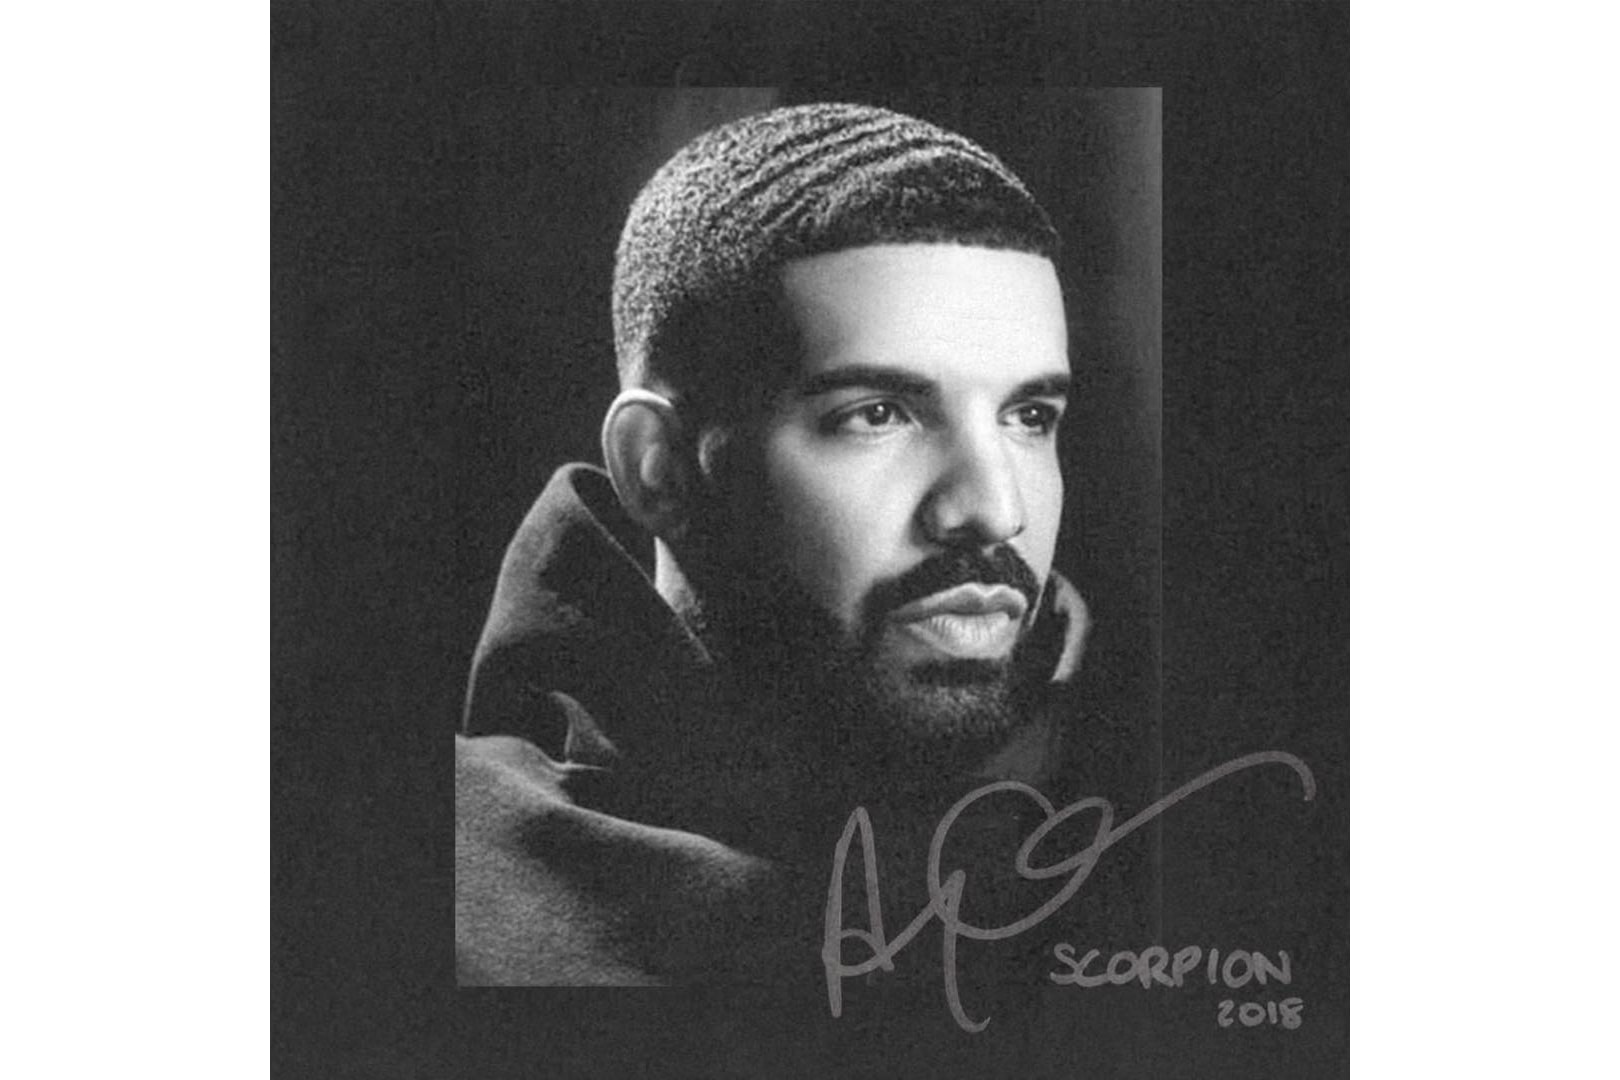 Pochette De L'Album "Scorpion" De Drake